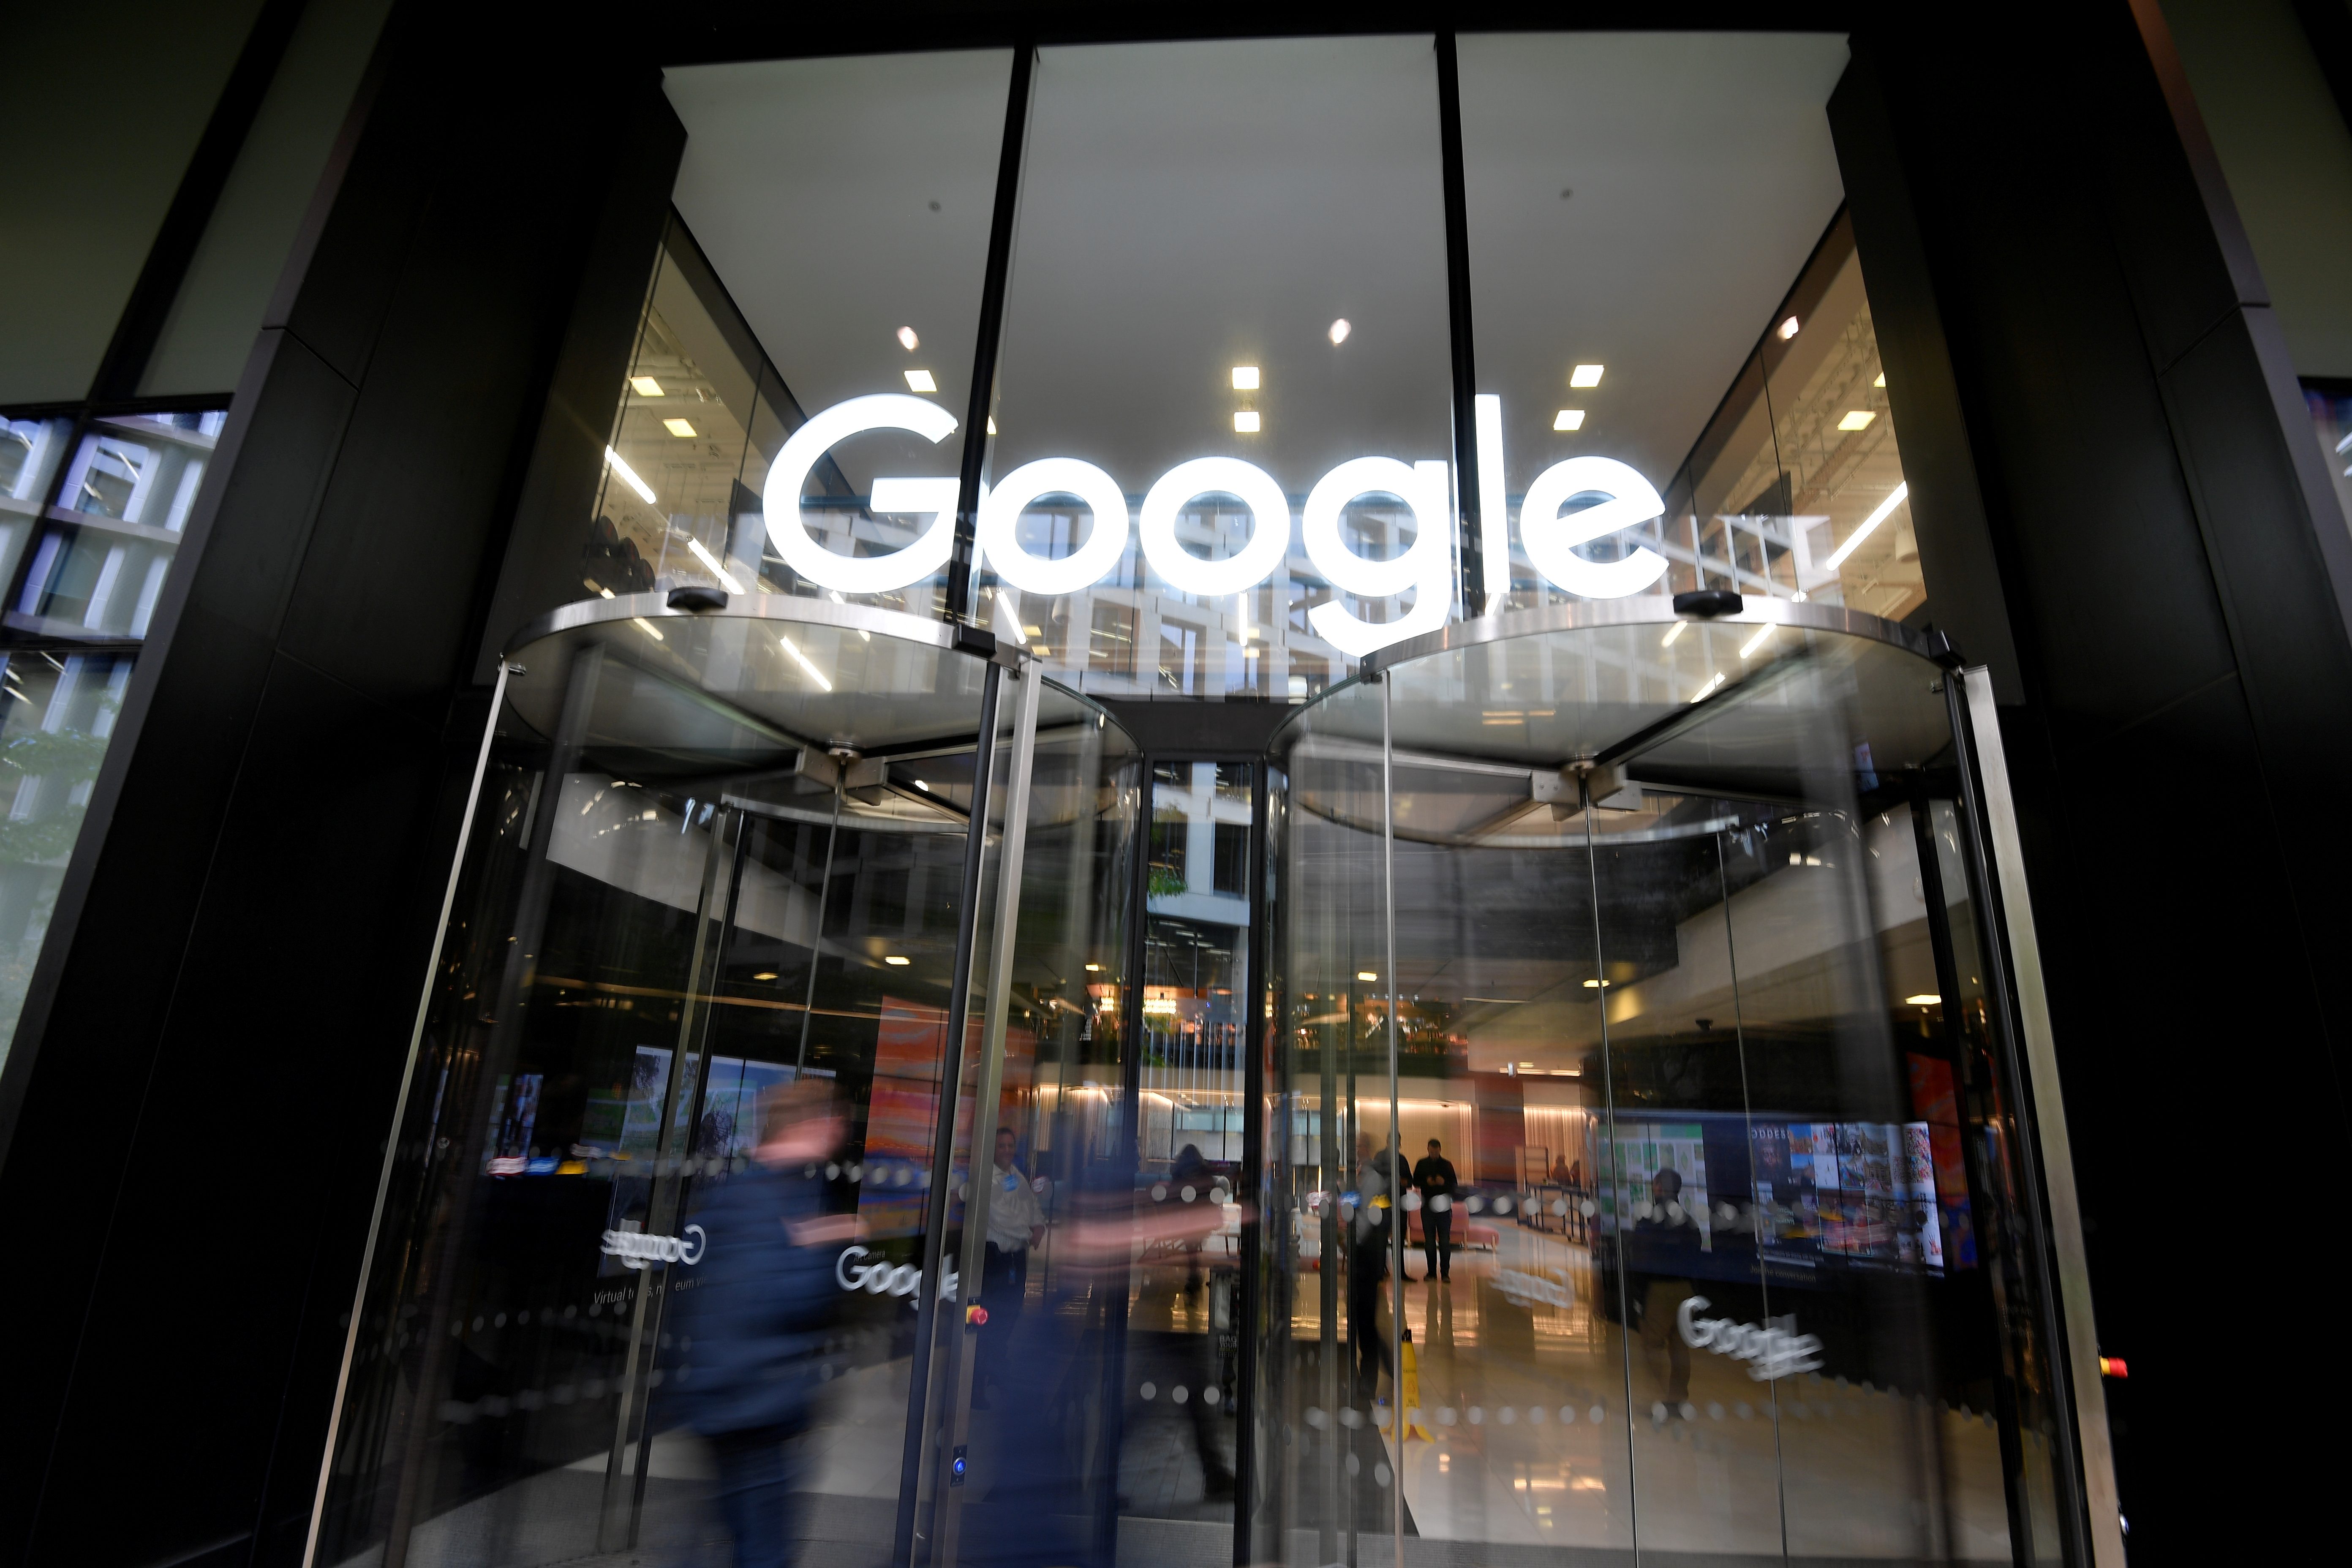 Australia finds Google misled customers over data collection – regulator